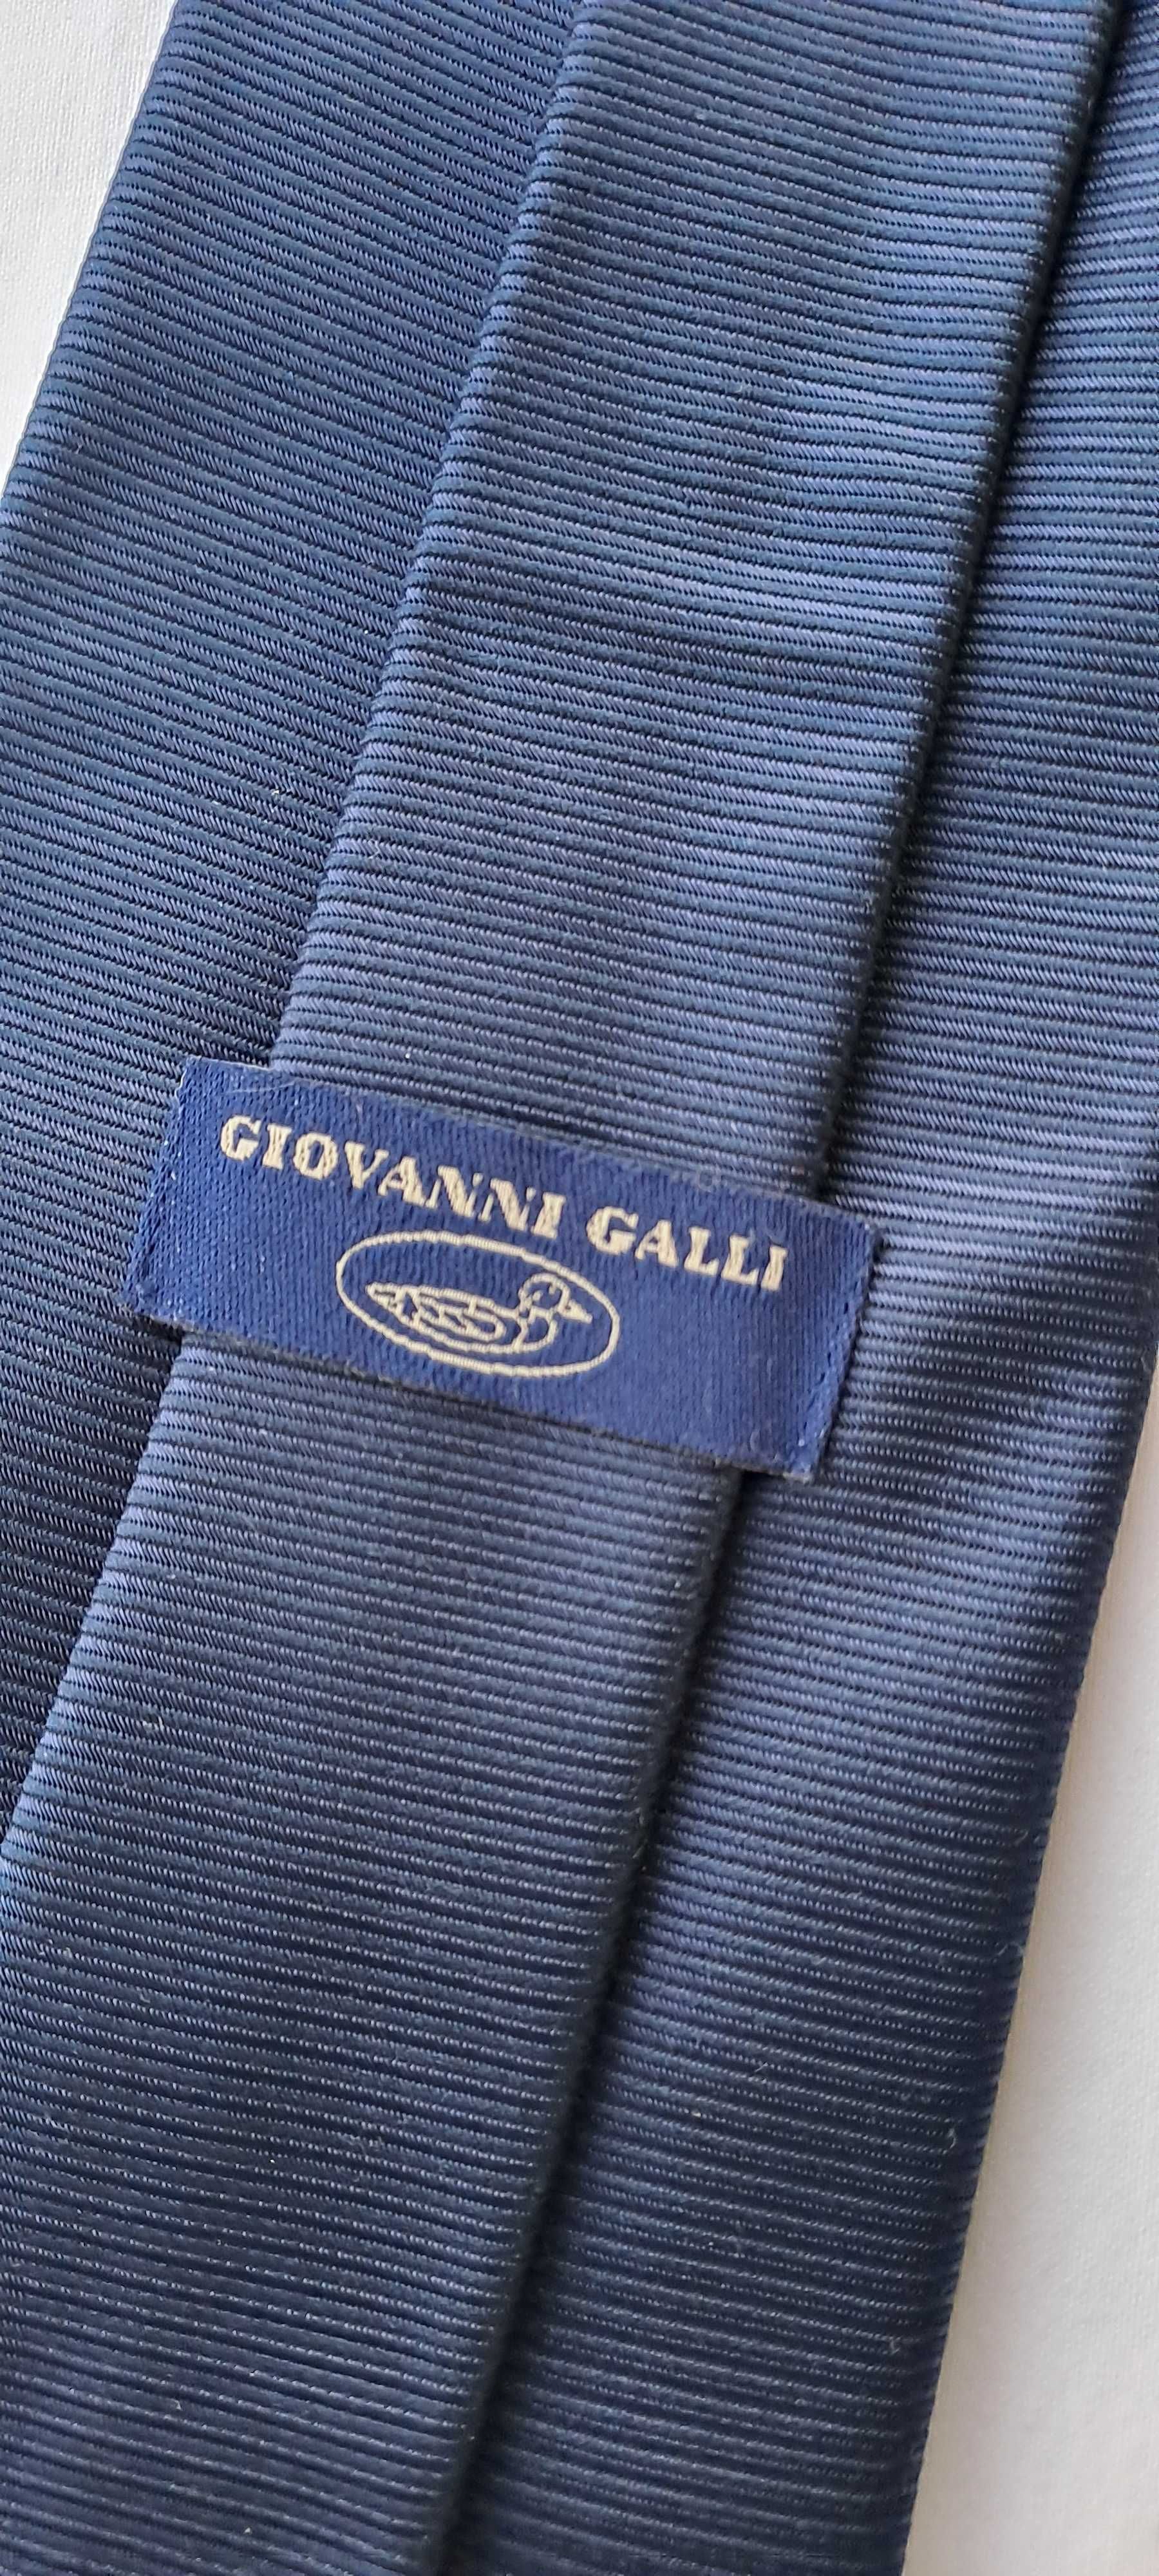 Gravata Giovanni Galli - Como Nova | Impecável